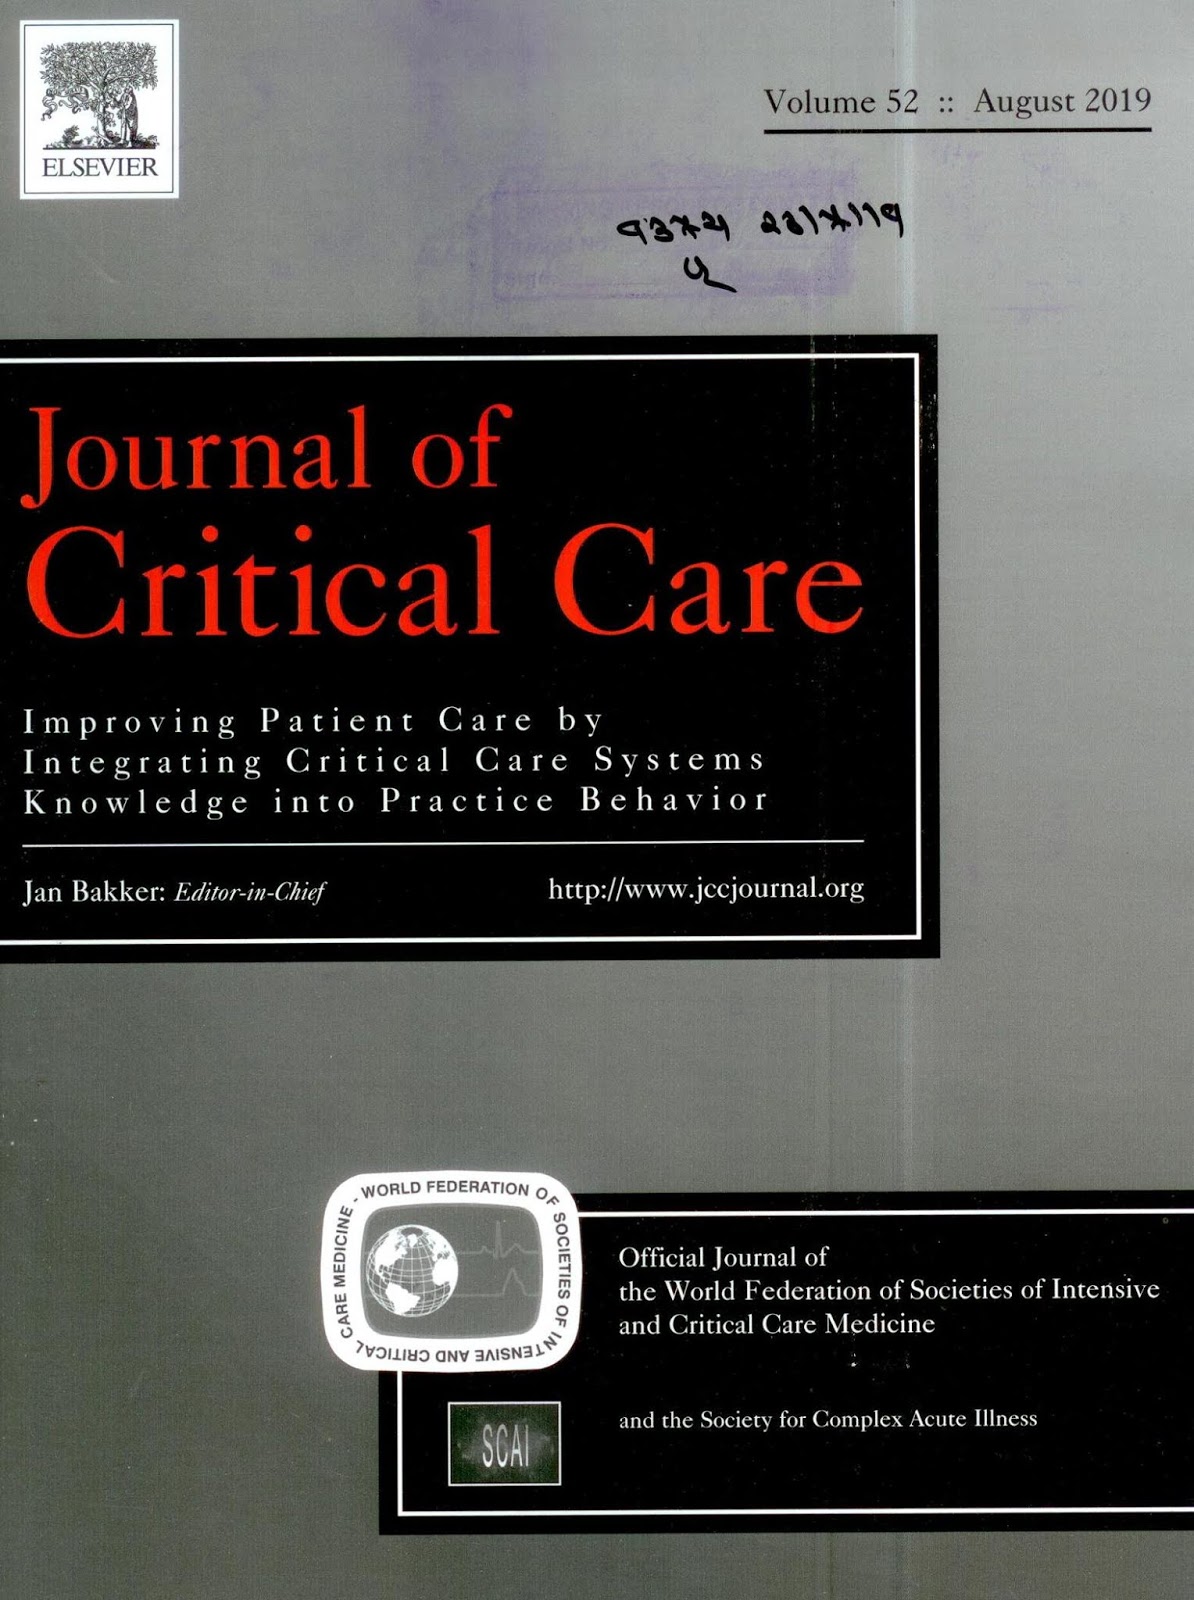 https://www.sciencedirect.com/journal/journal-of-critical-care/vol/52/suppl/C